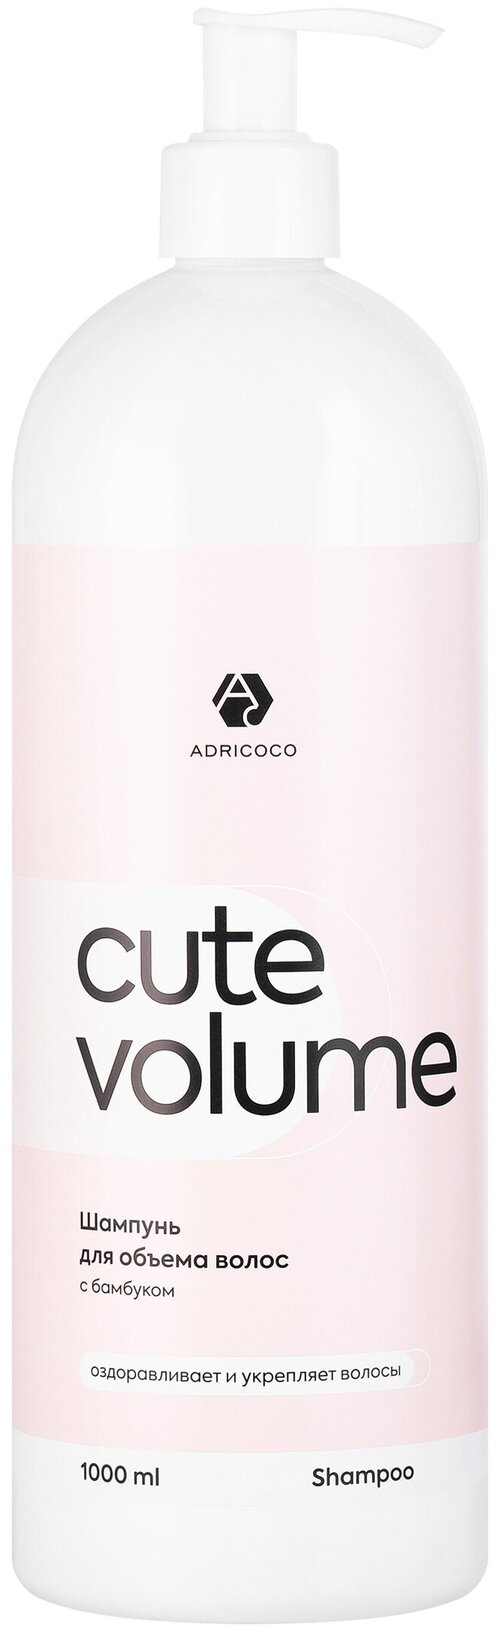 Шампунь для объема волос ADRICOCO CUTE VOLUME с бамбуком, 1000 мл